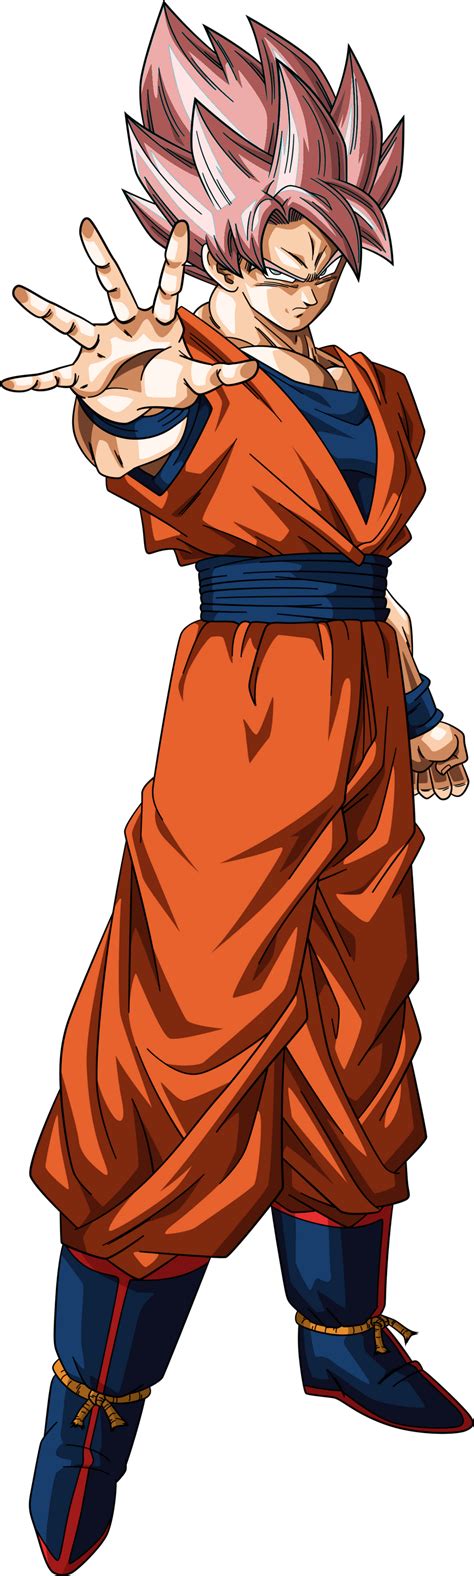 Super Saiyan Rose Goku By 345boneshoss On Deviantart